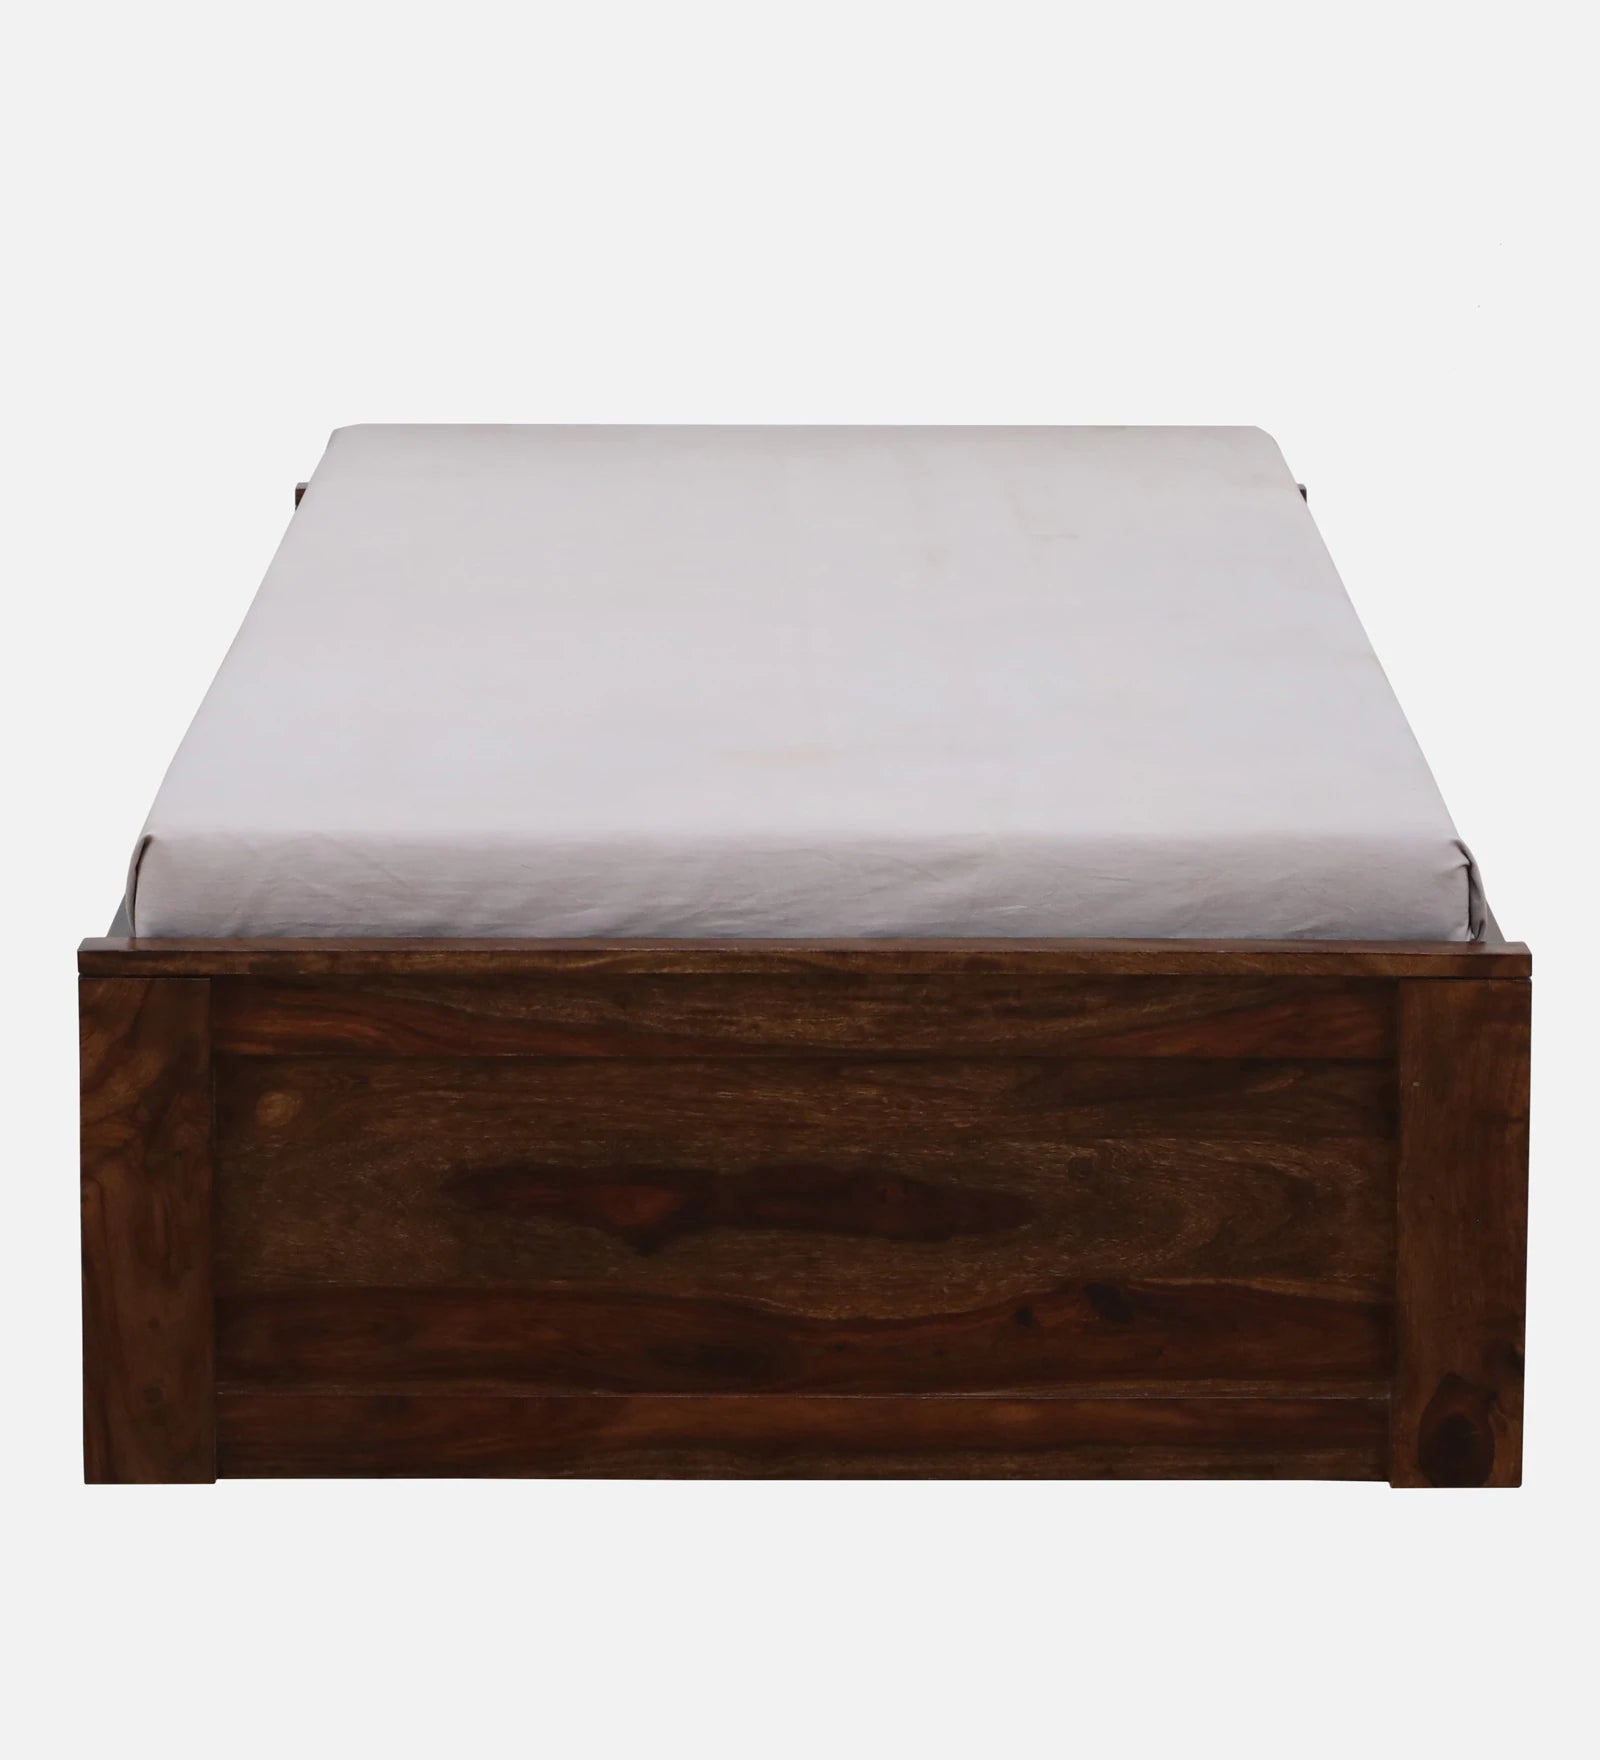 Divyam Sheesham Wood Single Bed In Provincial Teak Finish With Box Storage by Rajwada - Rajwada Furnish